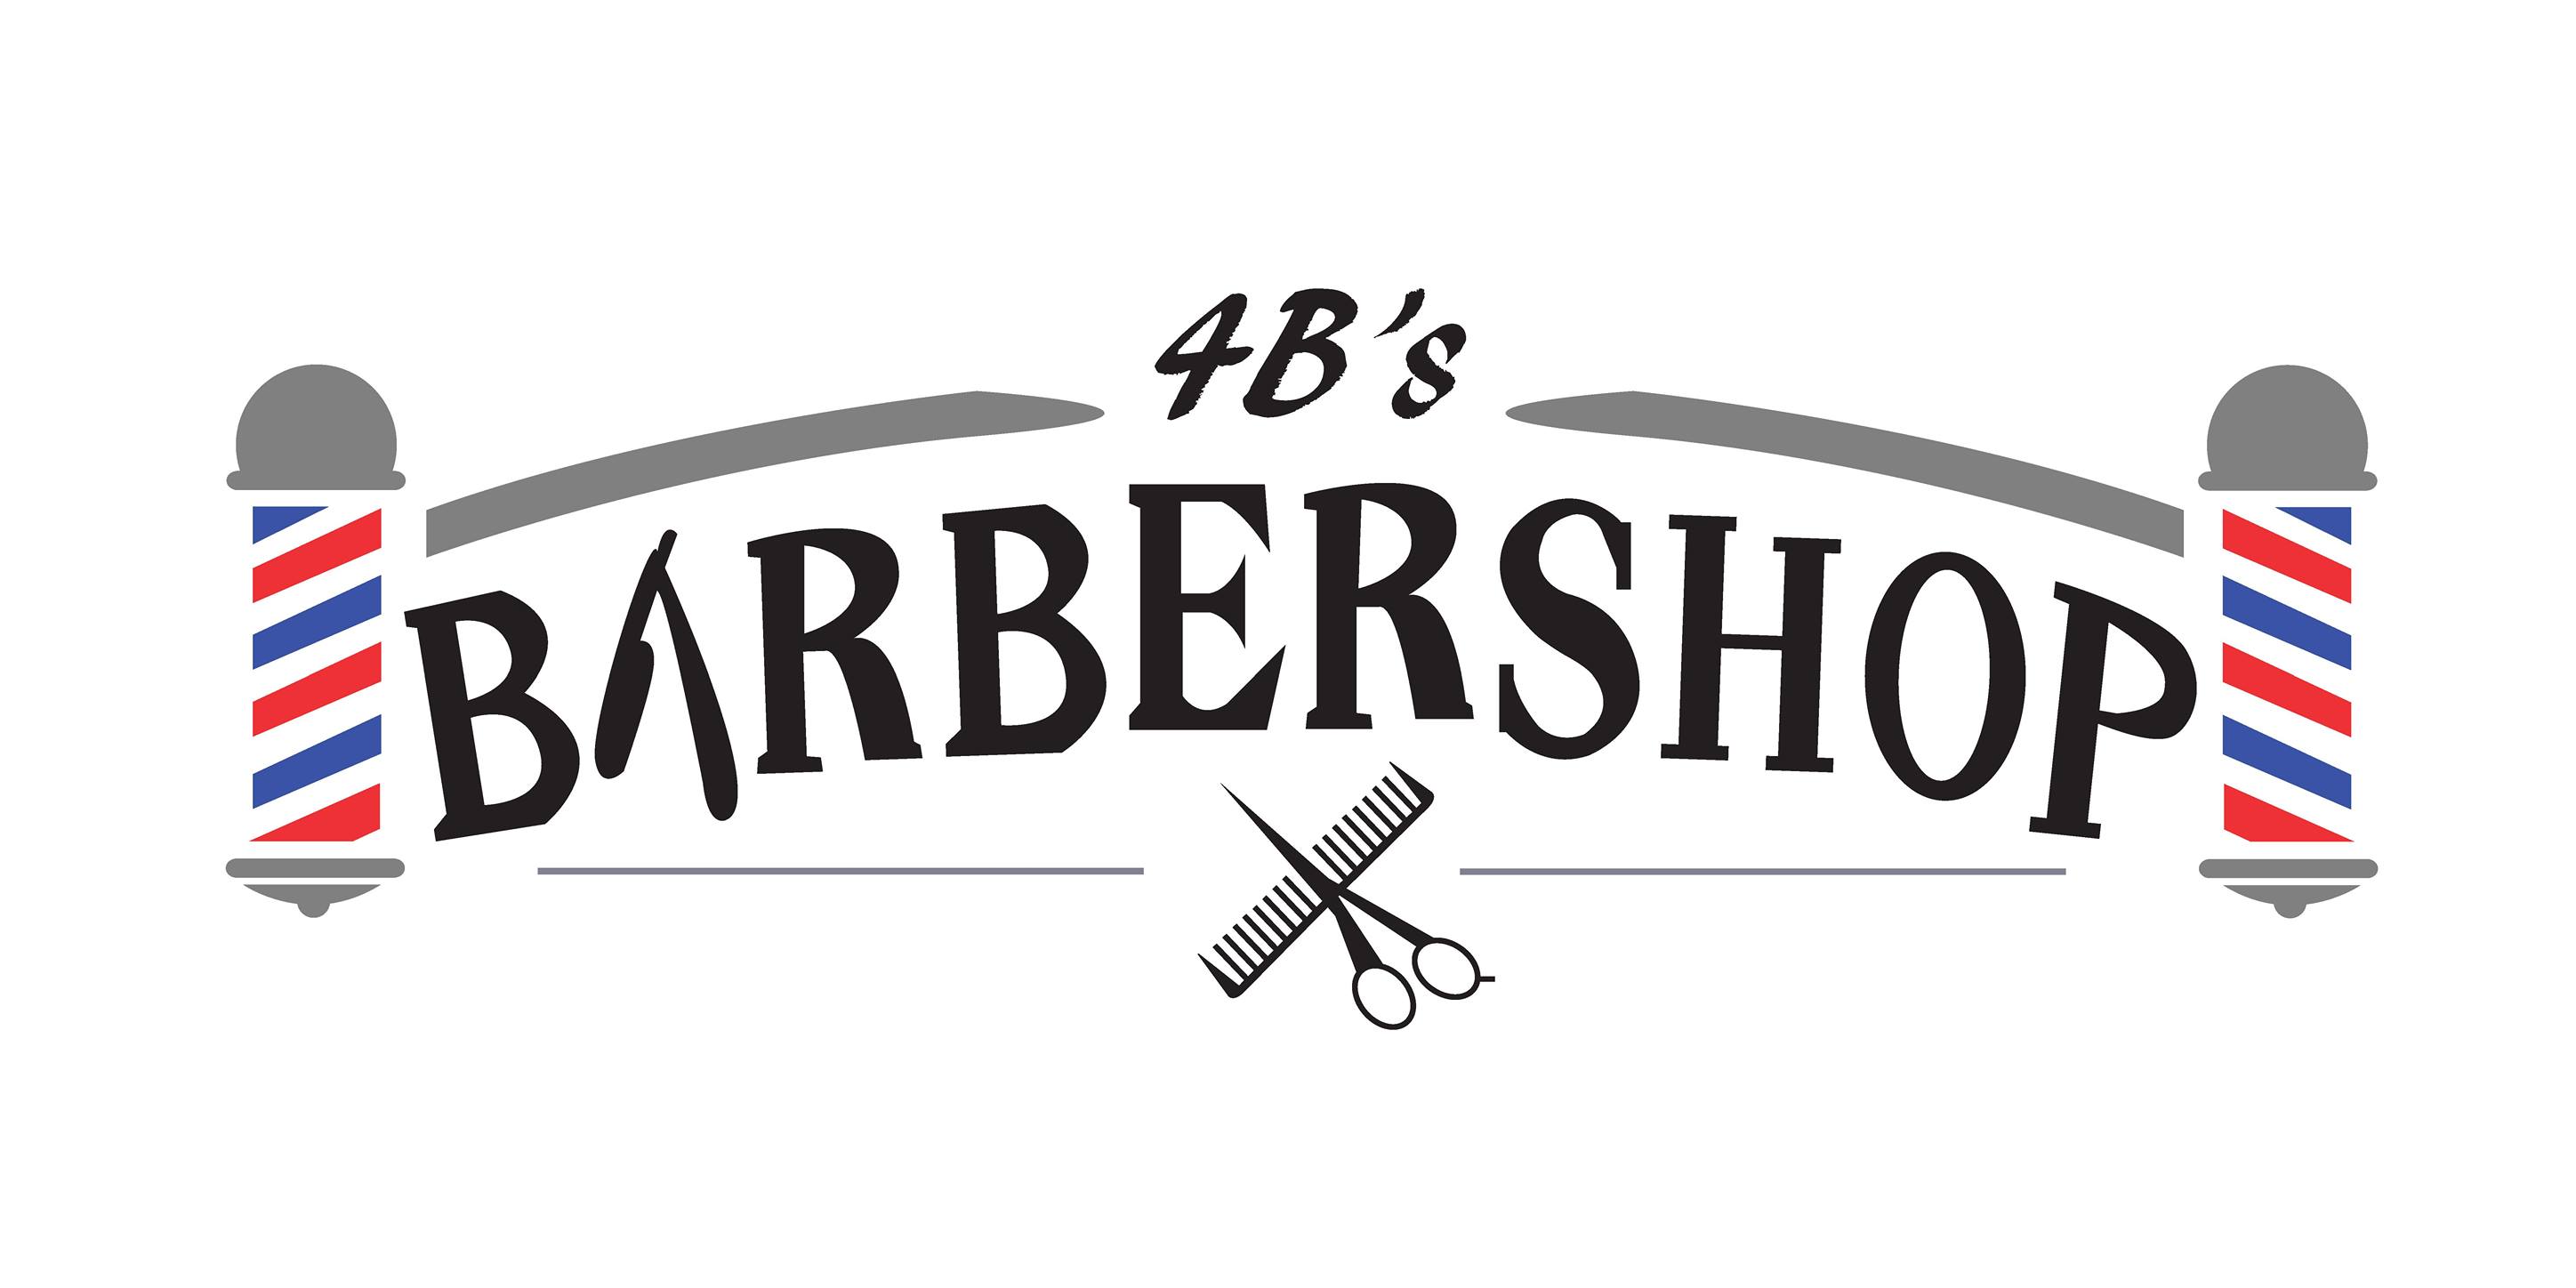 4B's Barbershop 711 N 3rd St, Boonville Indiana 47601